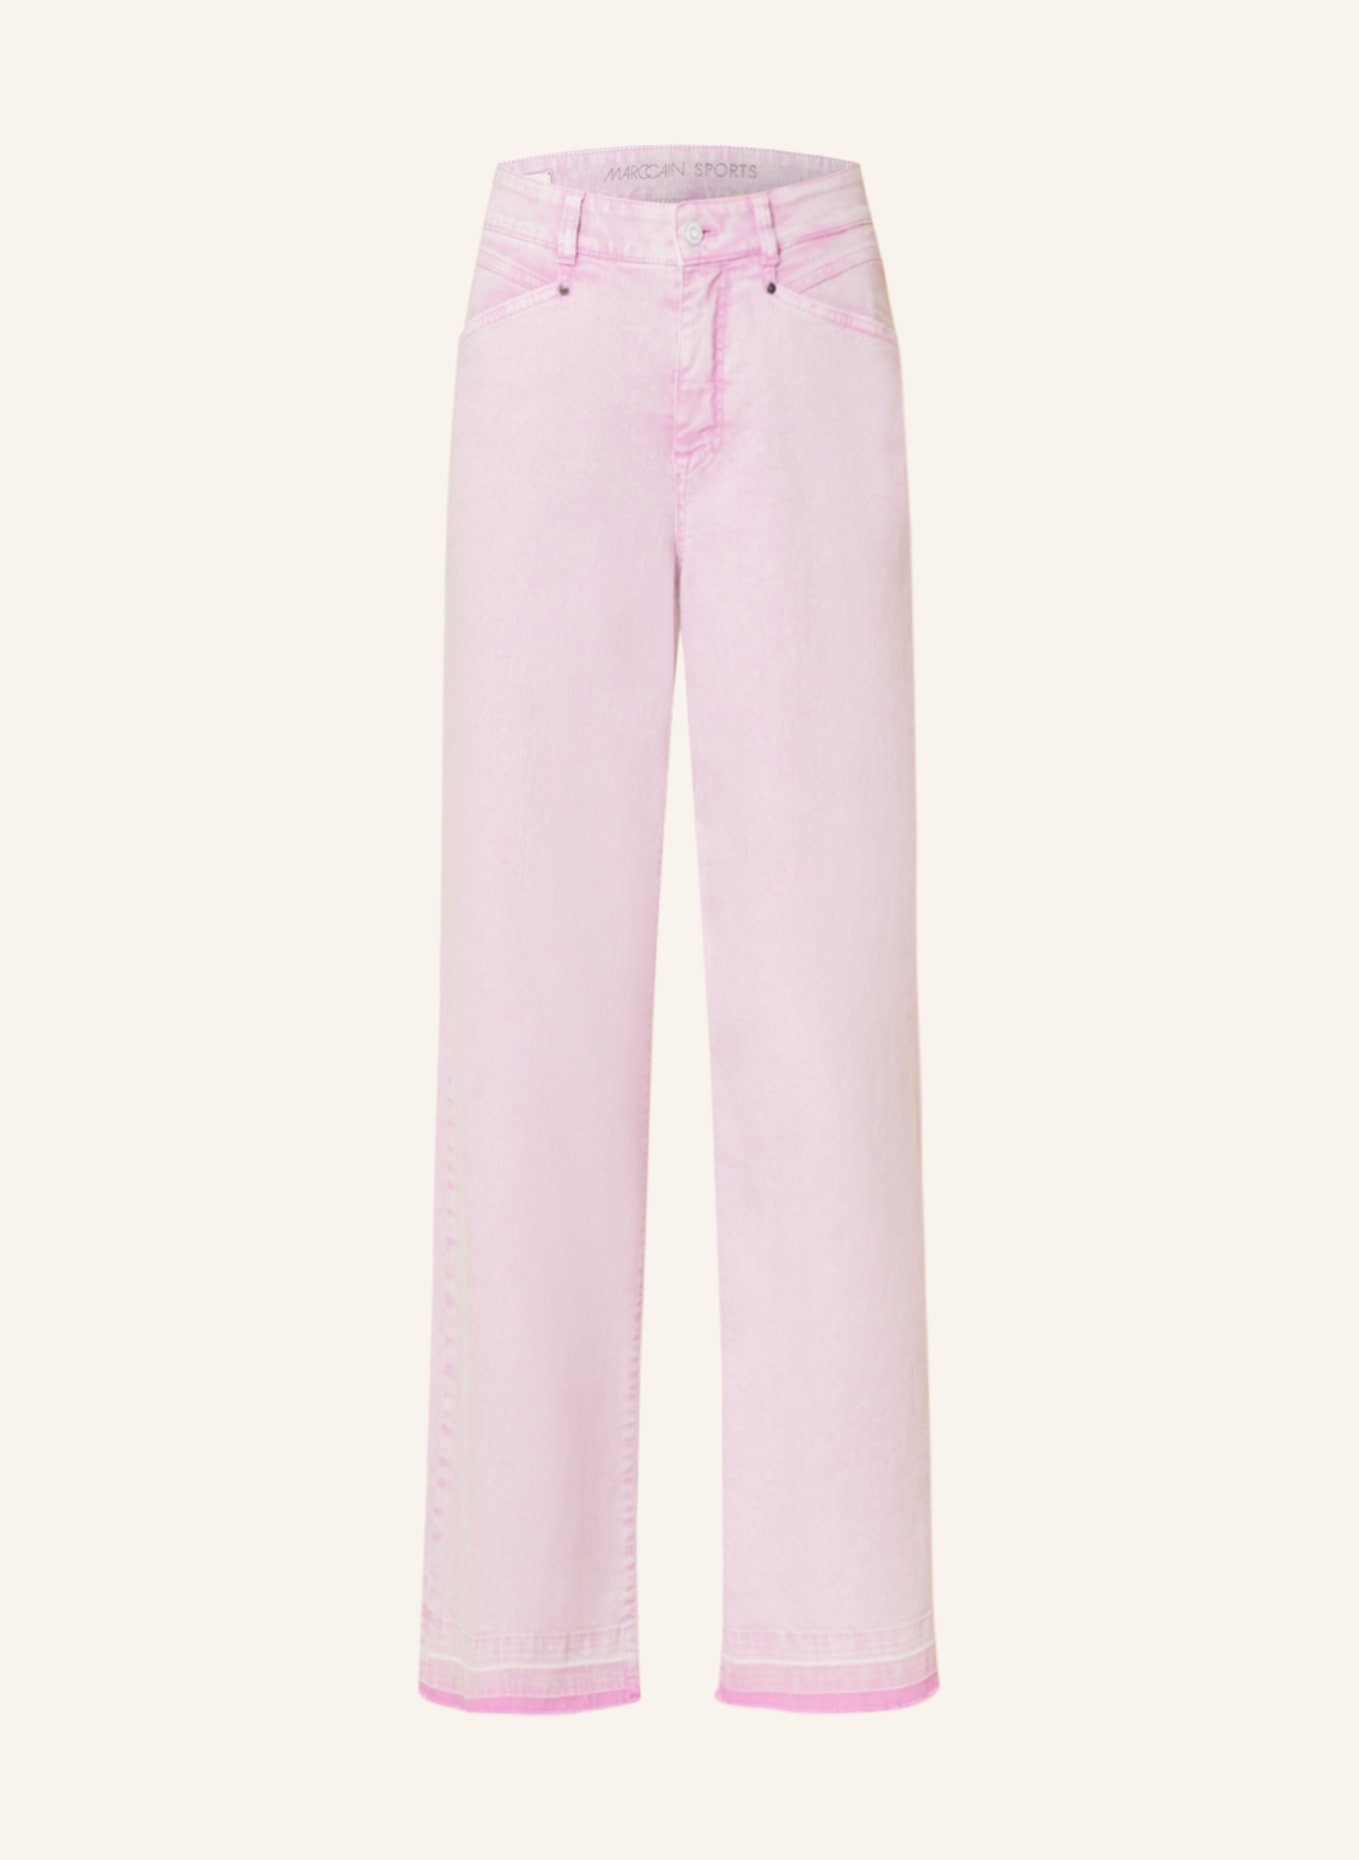 MARC CAIN Straight Jeans, Farbe: 708 bright pink lavender (Bild 1)